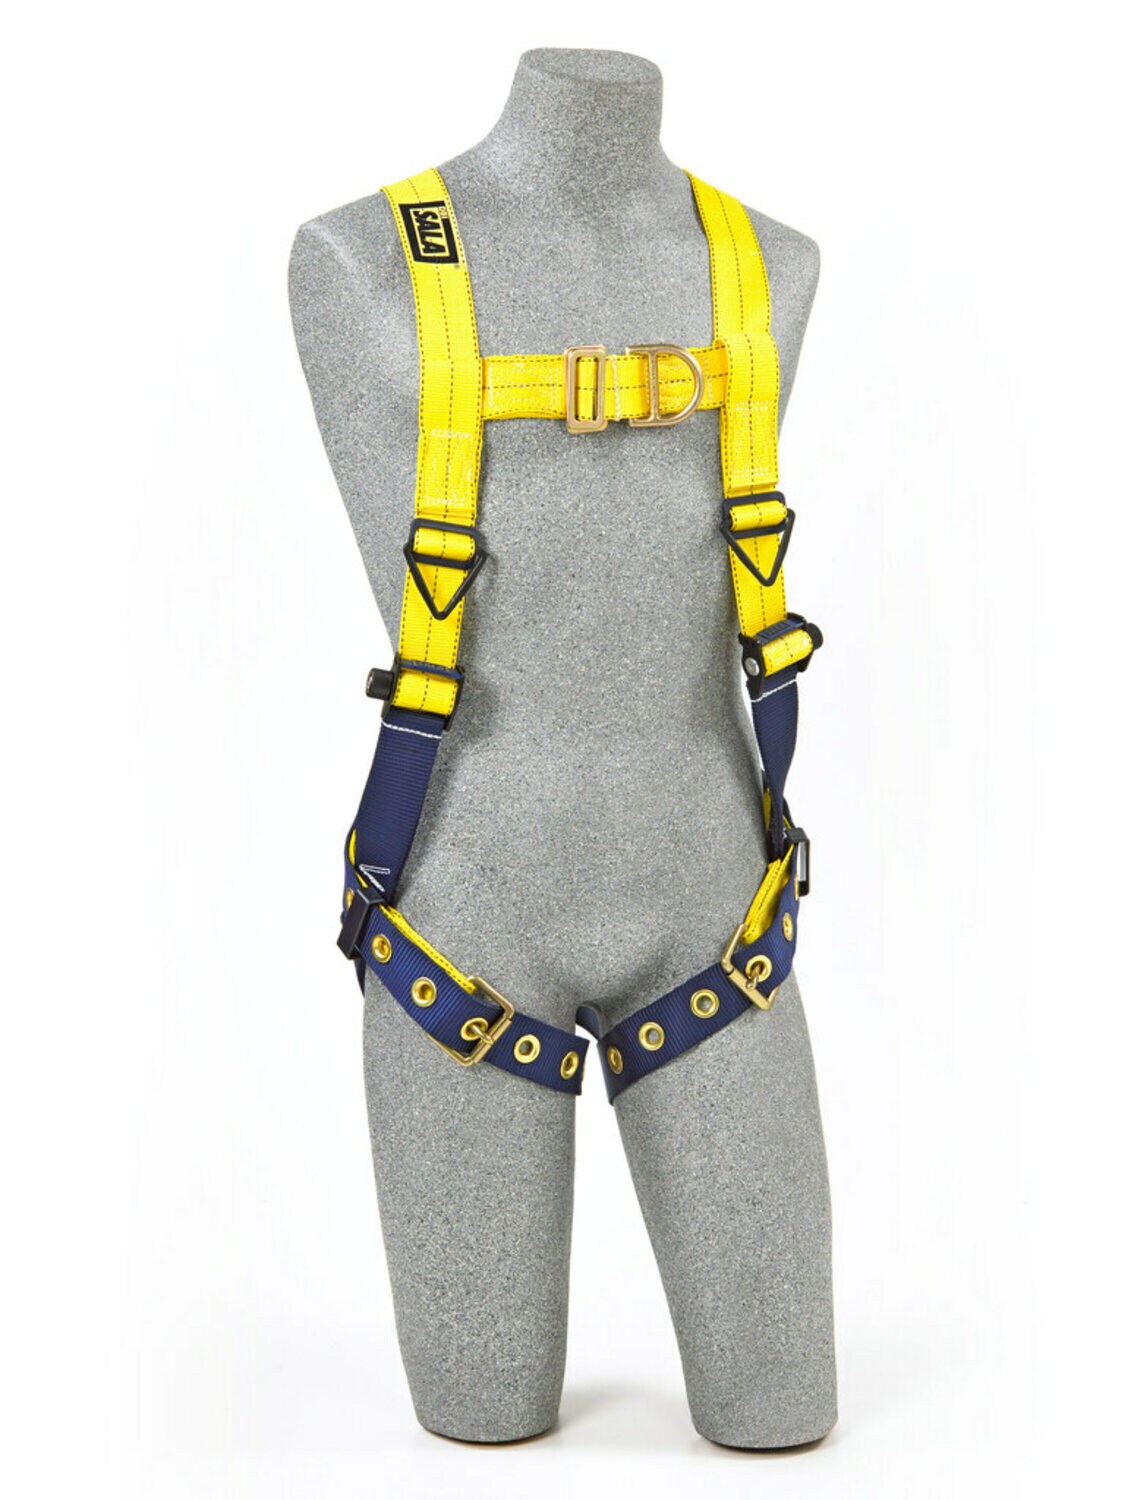 7100243784 - 3M DBI-SALA Delta Vest Climbing Safety Harness 1107807, Medium